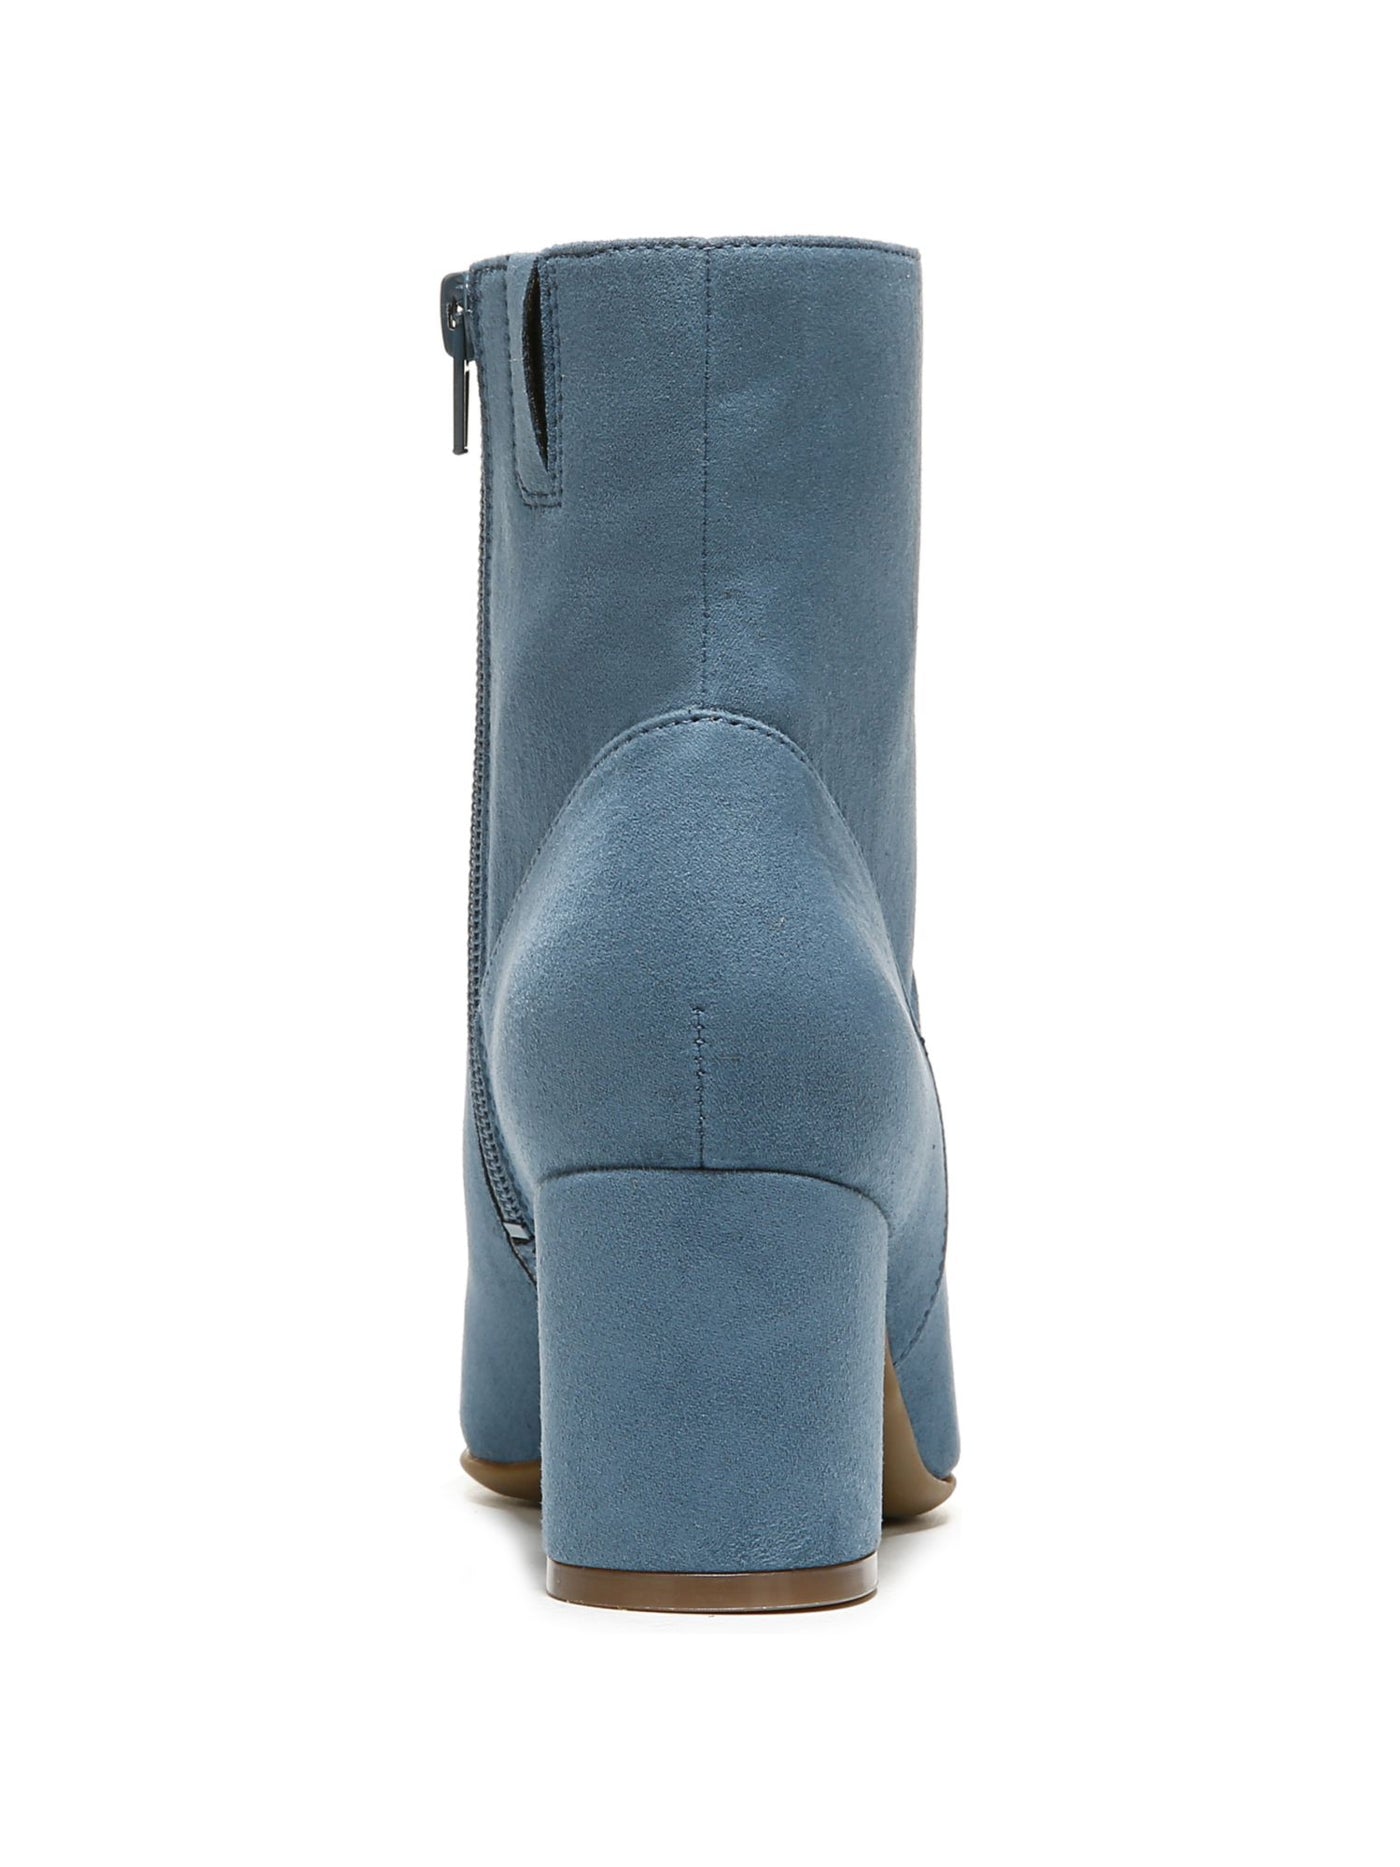 NATURALIZER Womens Blue Padded Wrenley Square Toe Block Heel Zip-Up Dress Booties 10 W